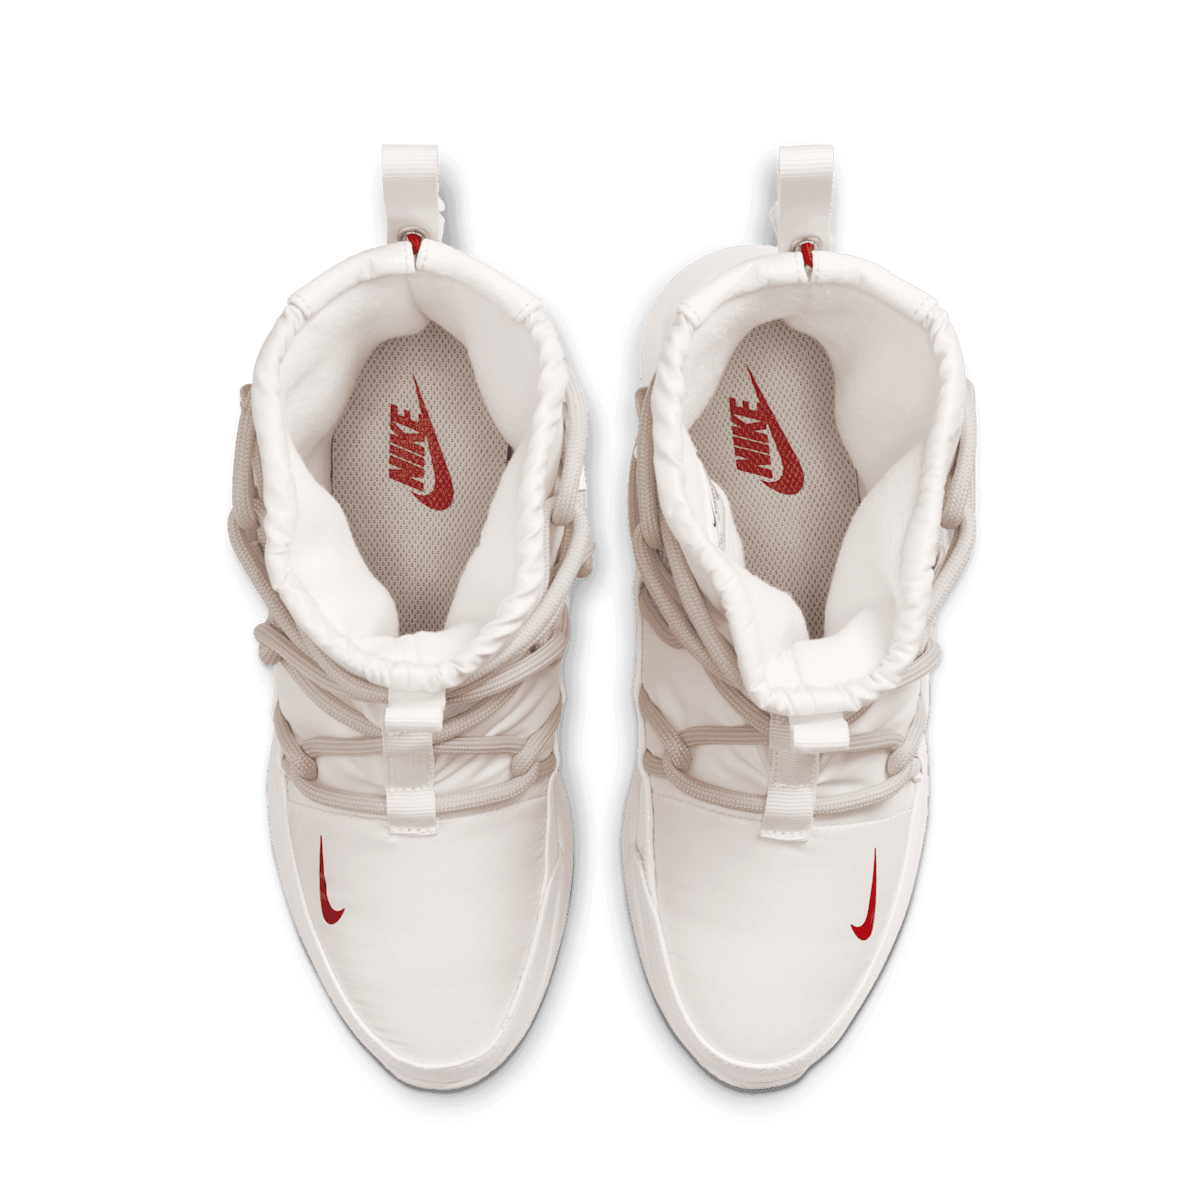 Nike Tanjun High Raffles and White AO0355-005 Rise - Date Shoes Release in